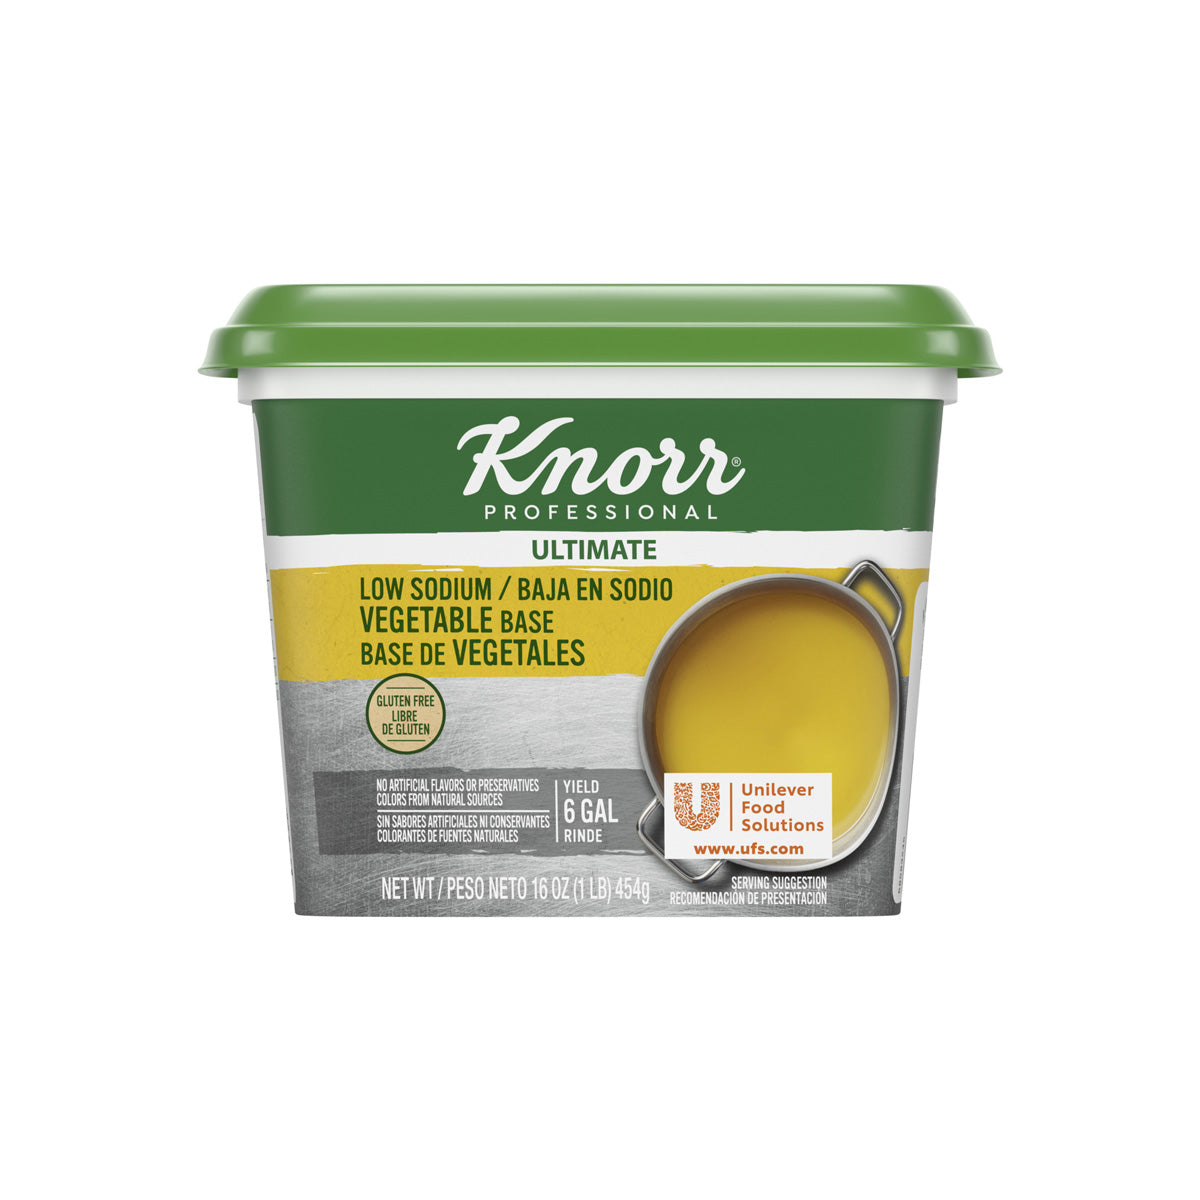 Knorr Low Sodium Gluten Free Vegetable Broth 1 LB